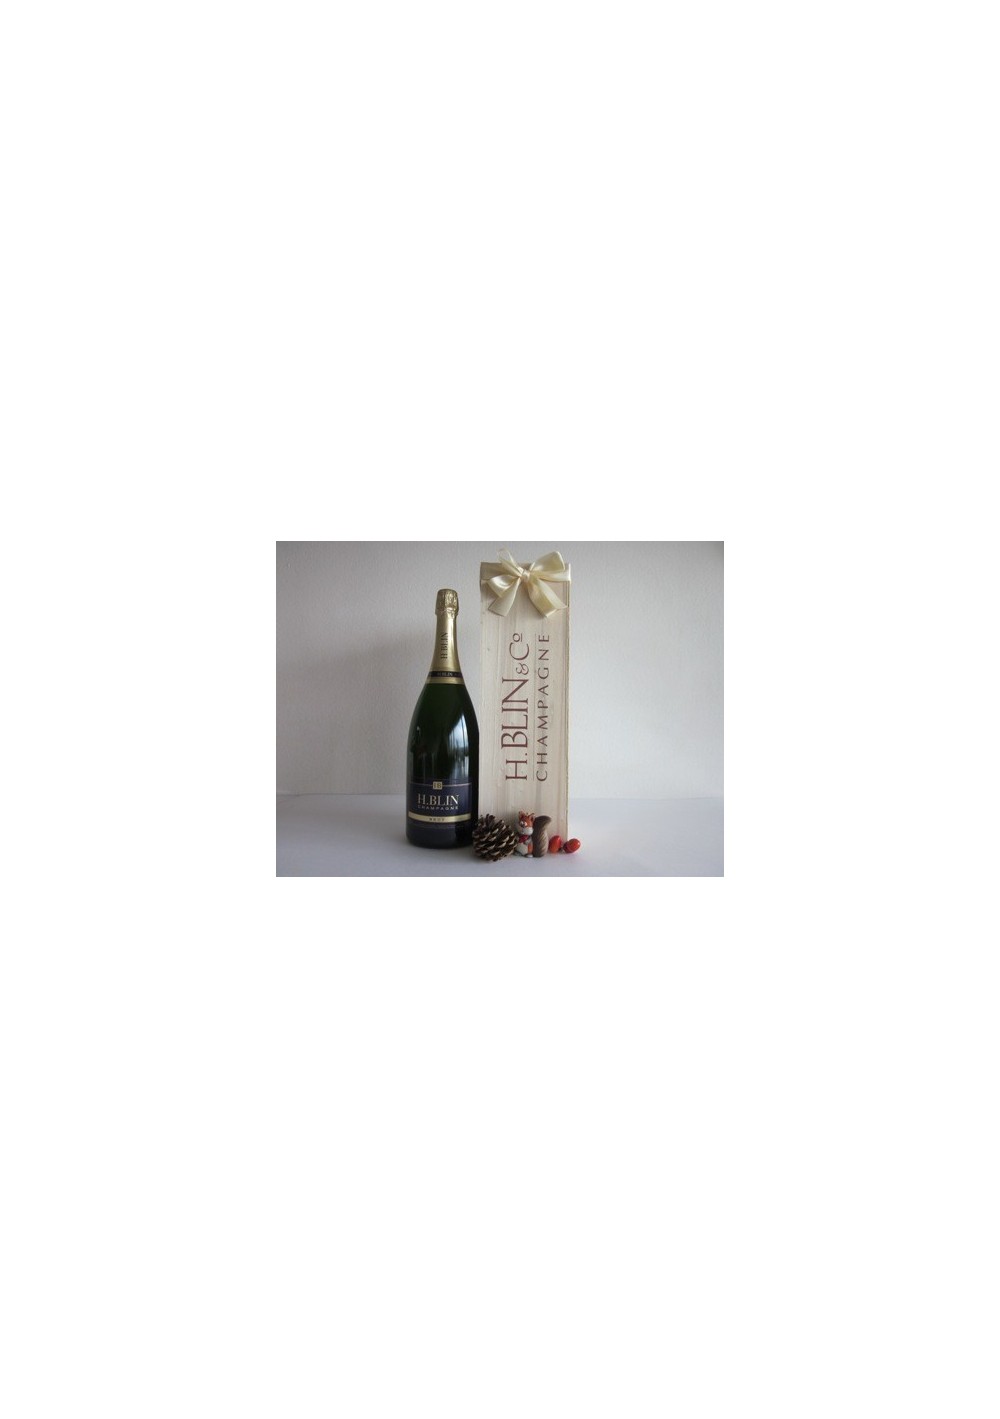 Champagne H. BLIN - Brut - Jéroboam